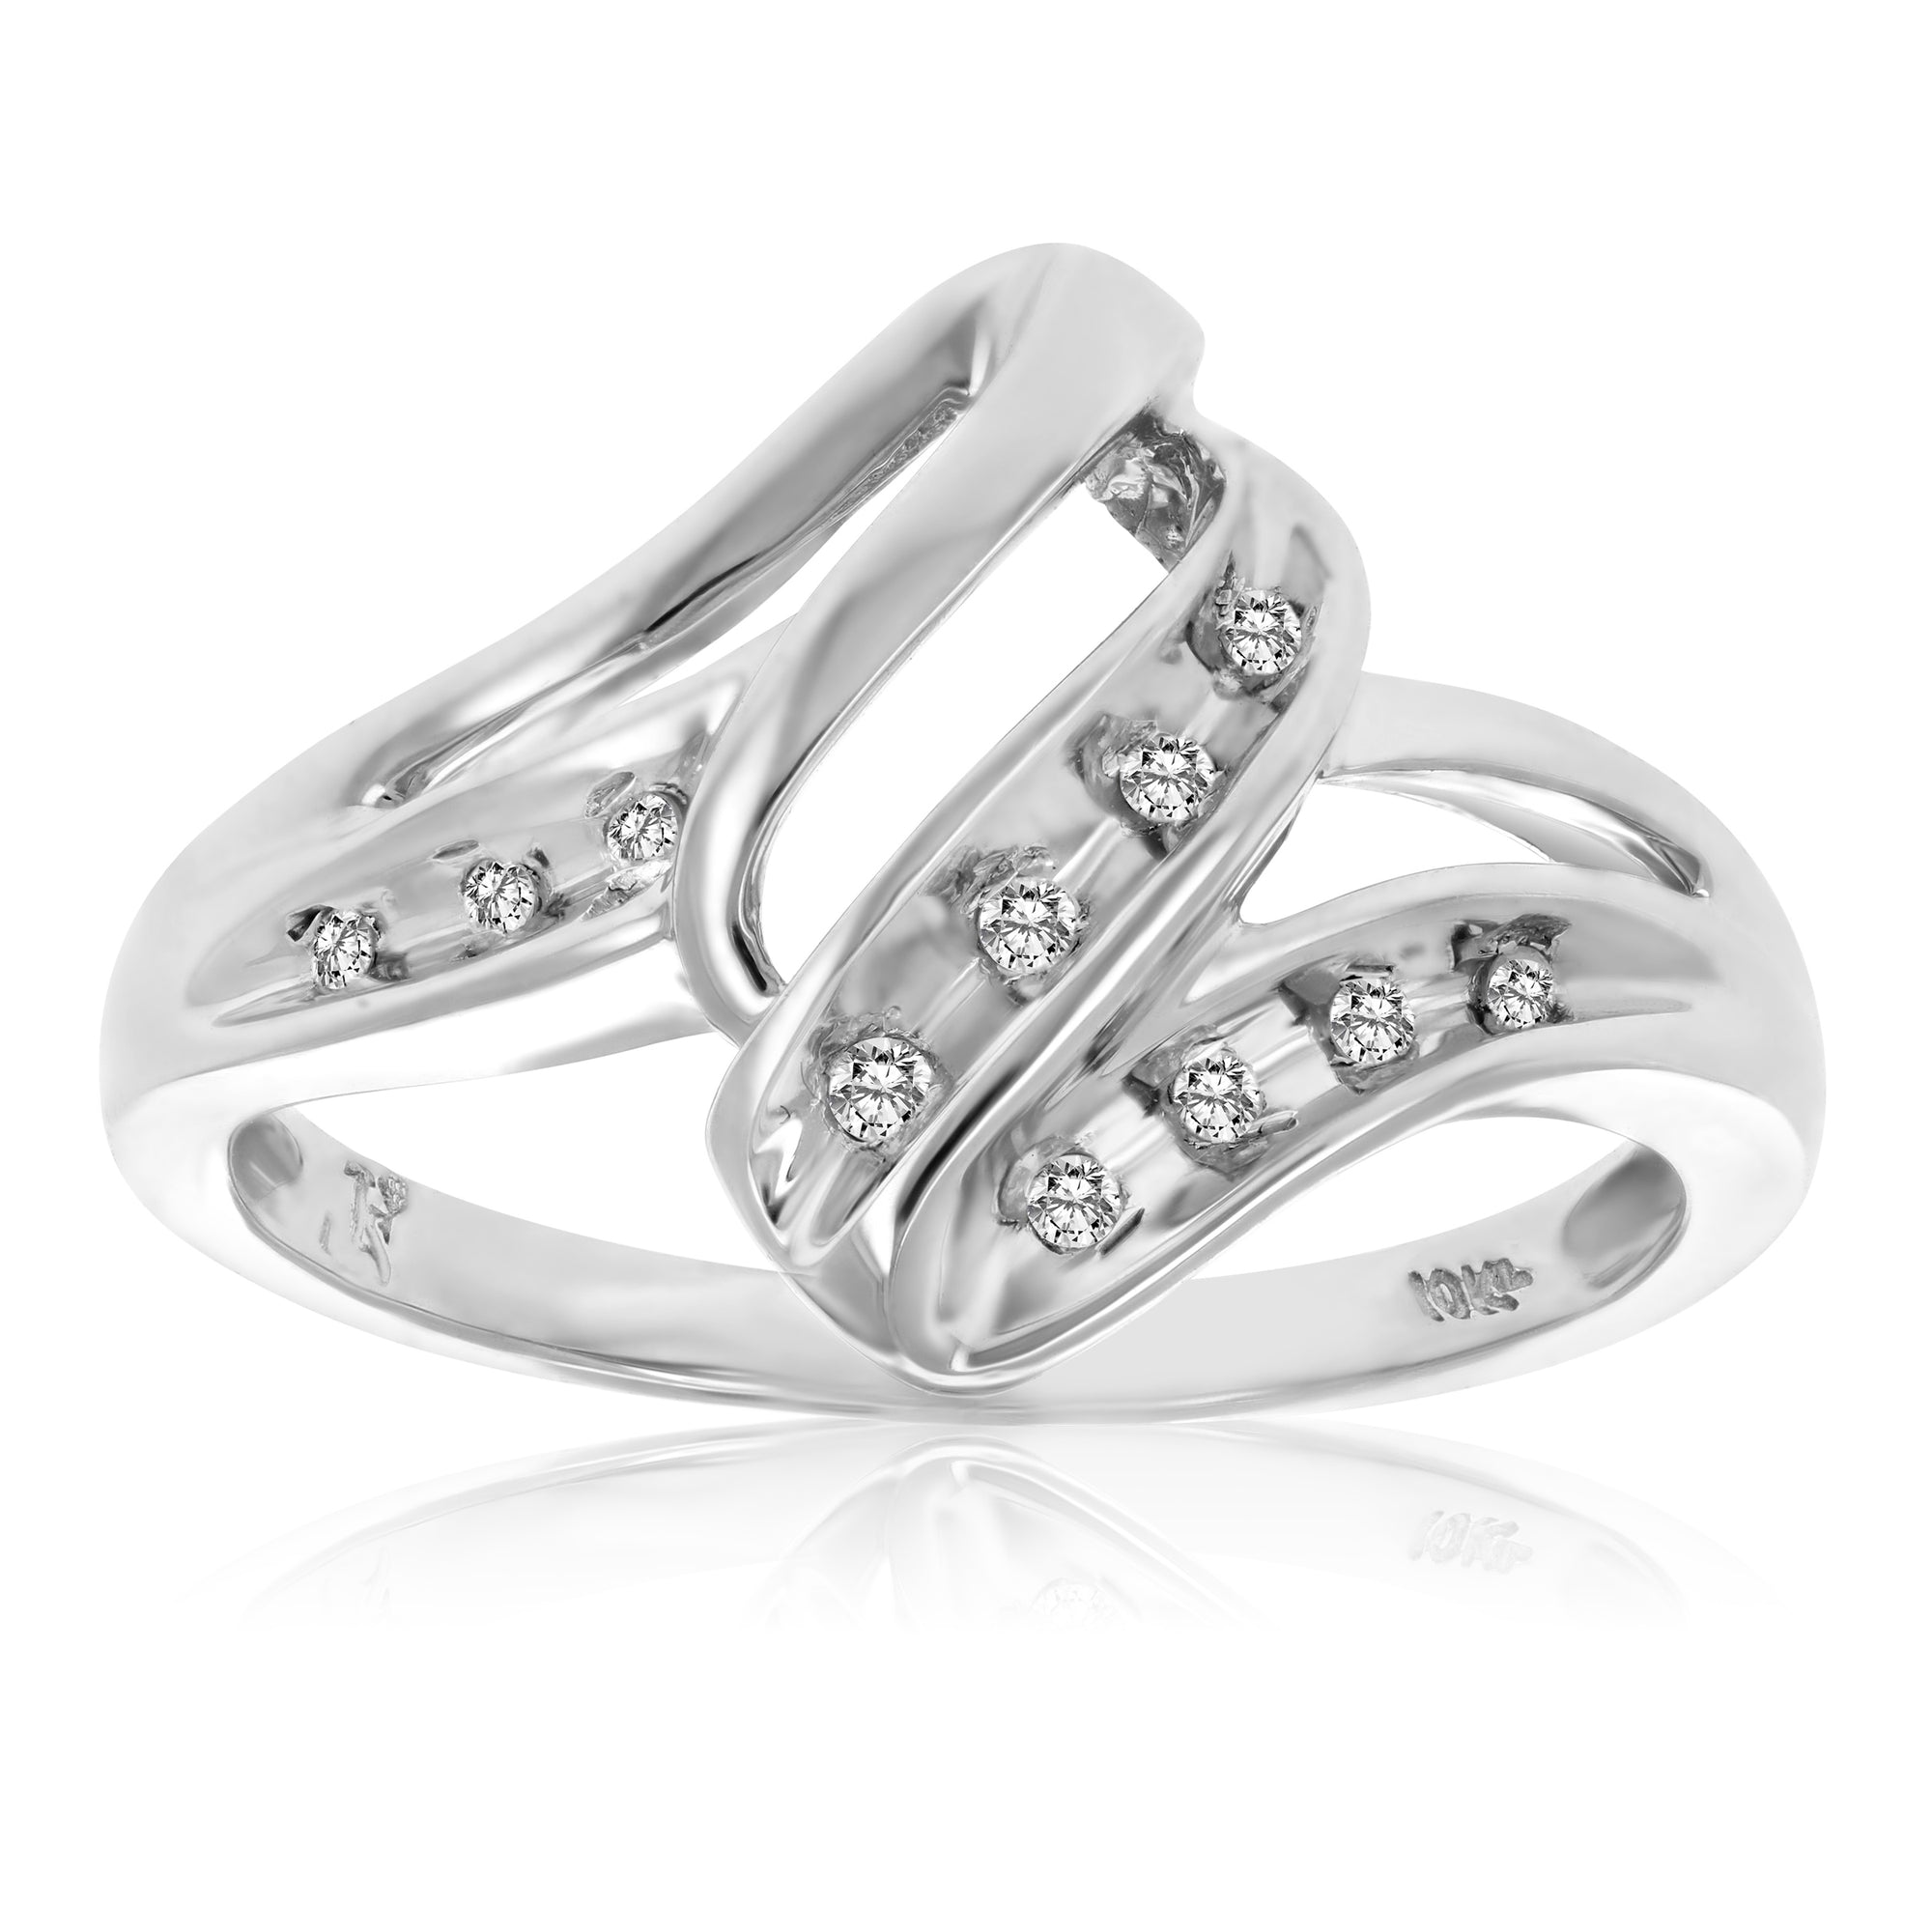 1/12 cttw Diamond Fashion Swirl Ring 10K White Gold Size 7.5